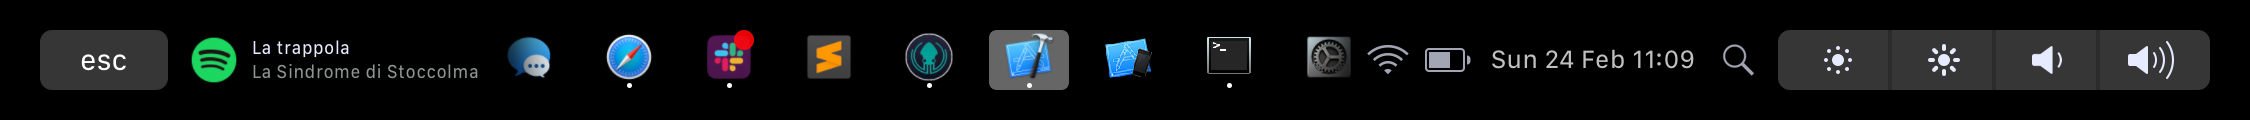 Mac touch bar apps